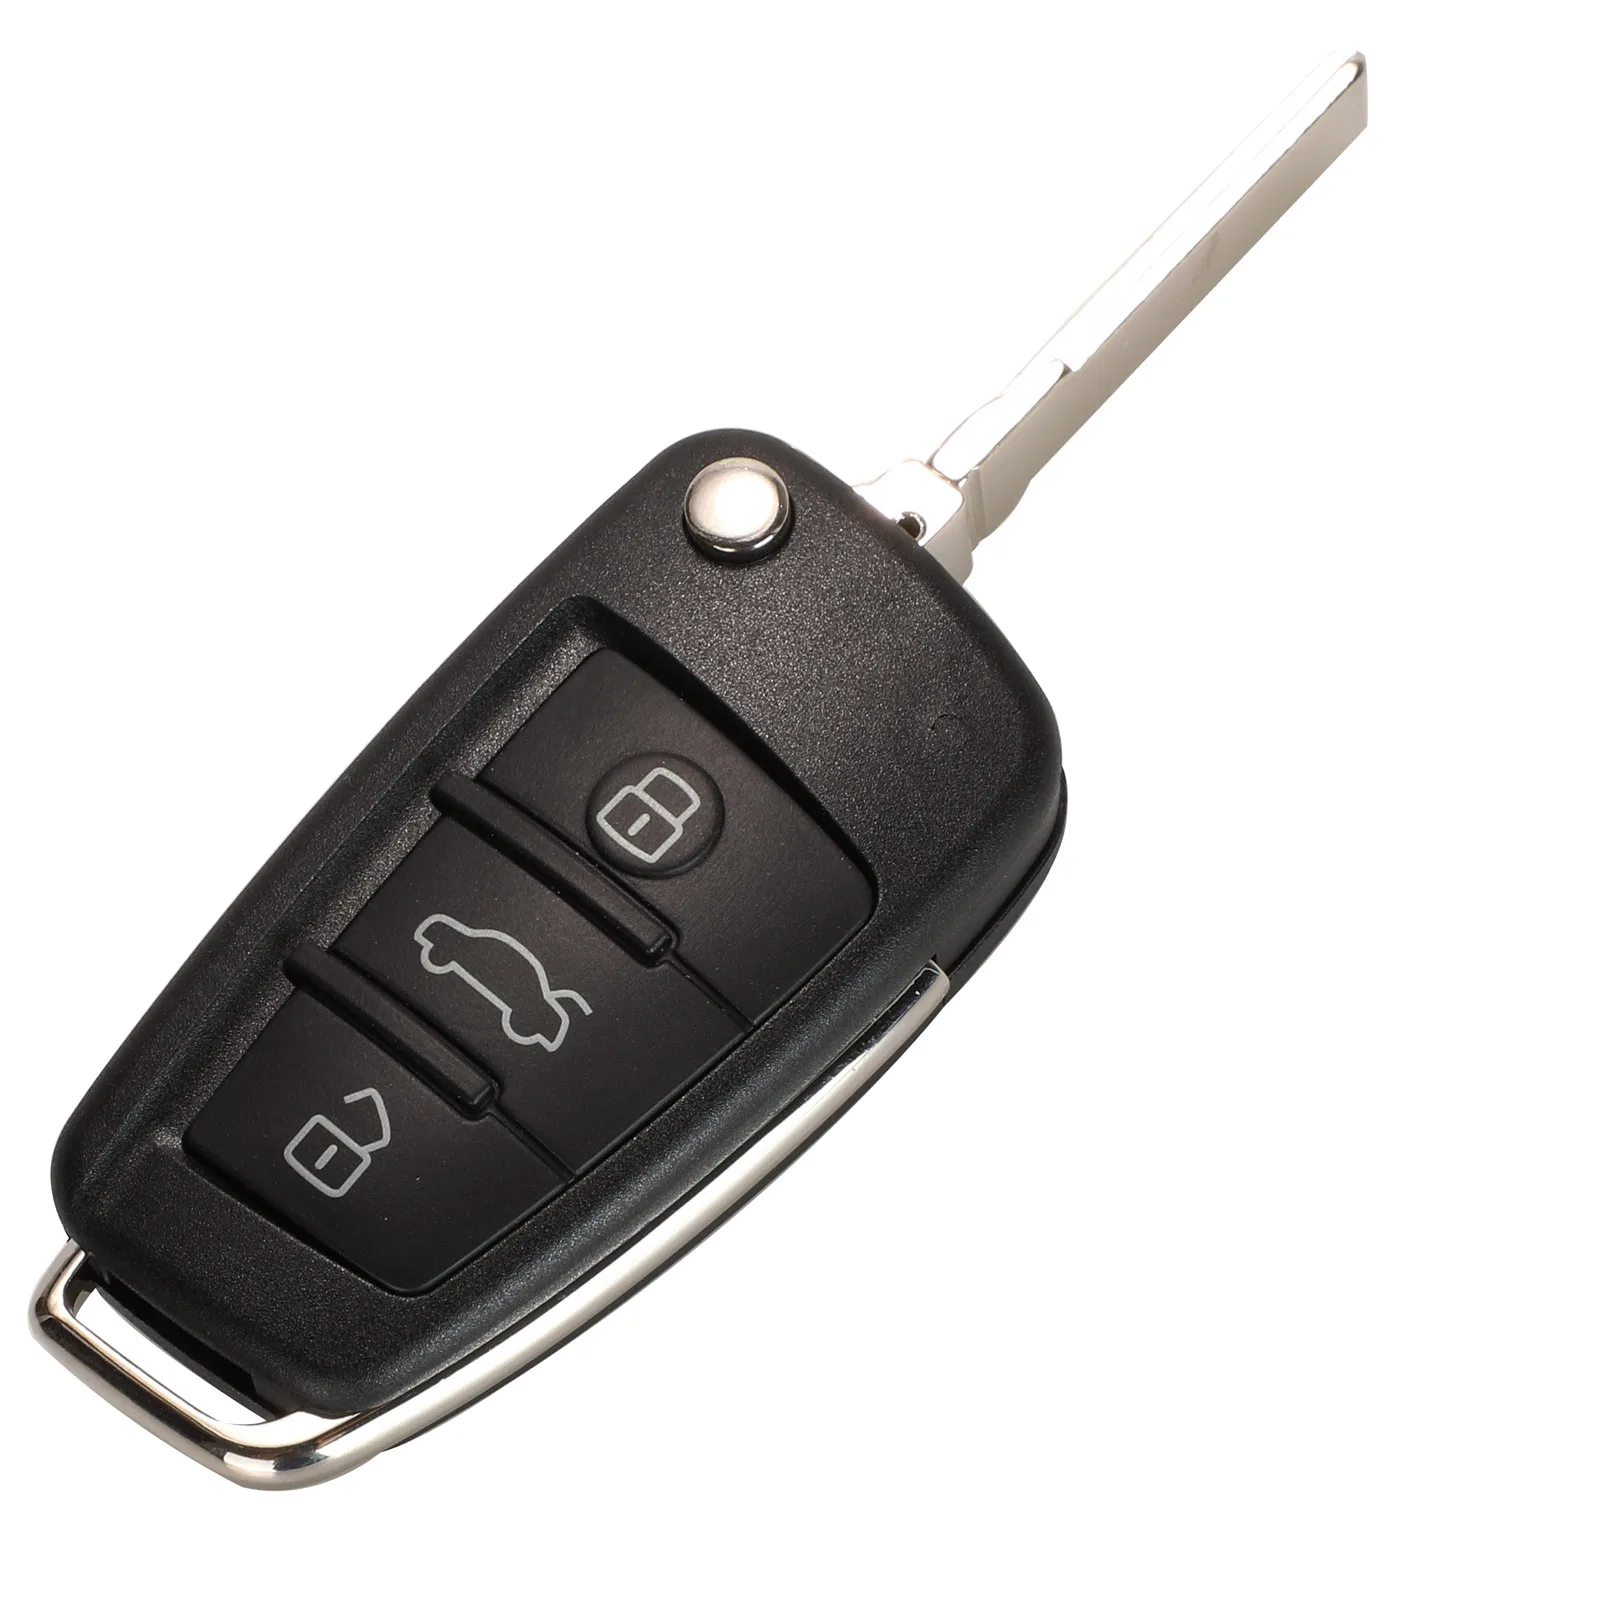 Kutery for MQB Semi Intelligente Fjernbetjening Nøgle 3-Knappen for at Folde Flip Smart Bil Key Fob for Audi A3 433Mhz